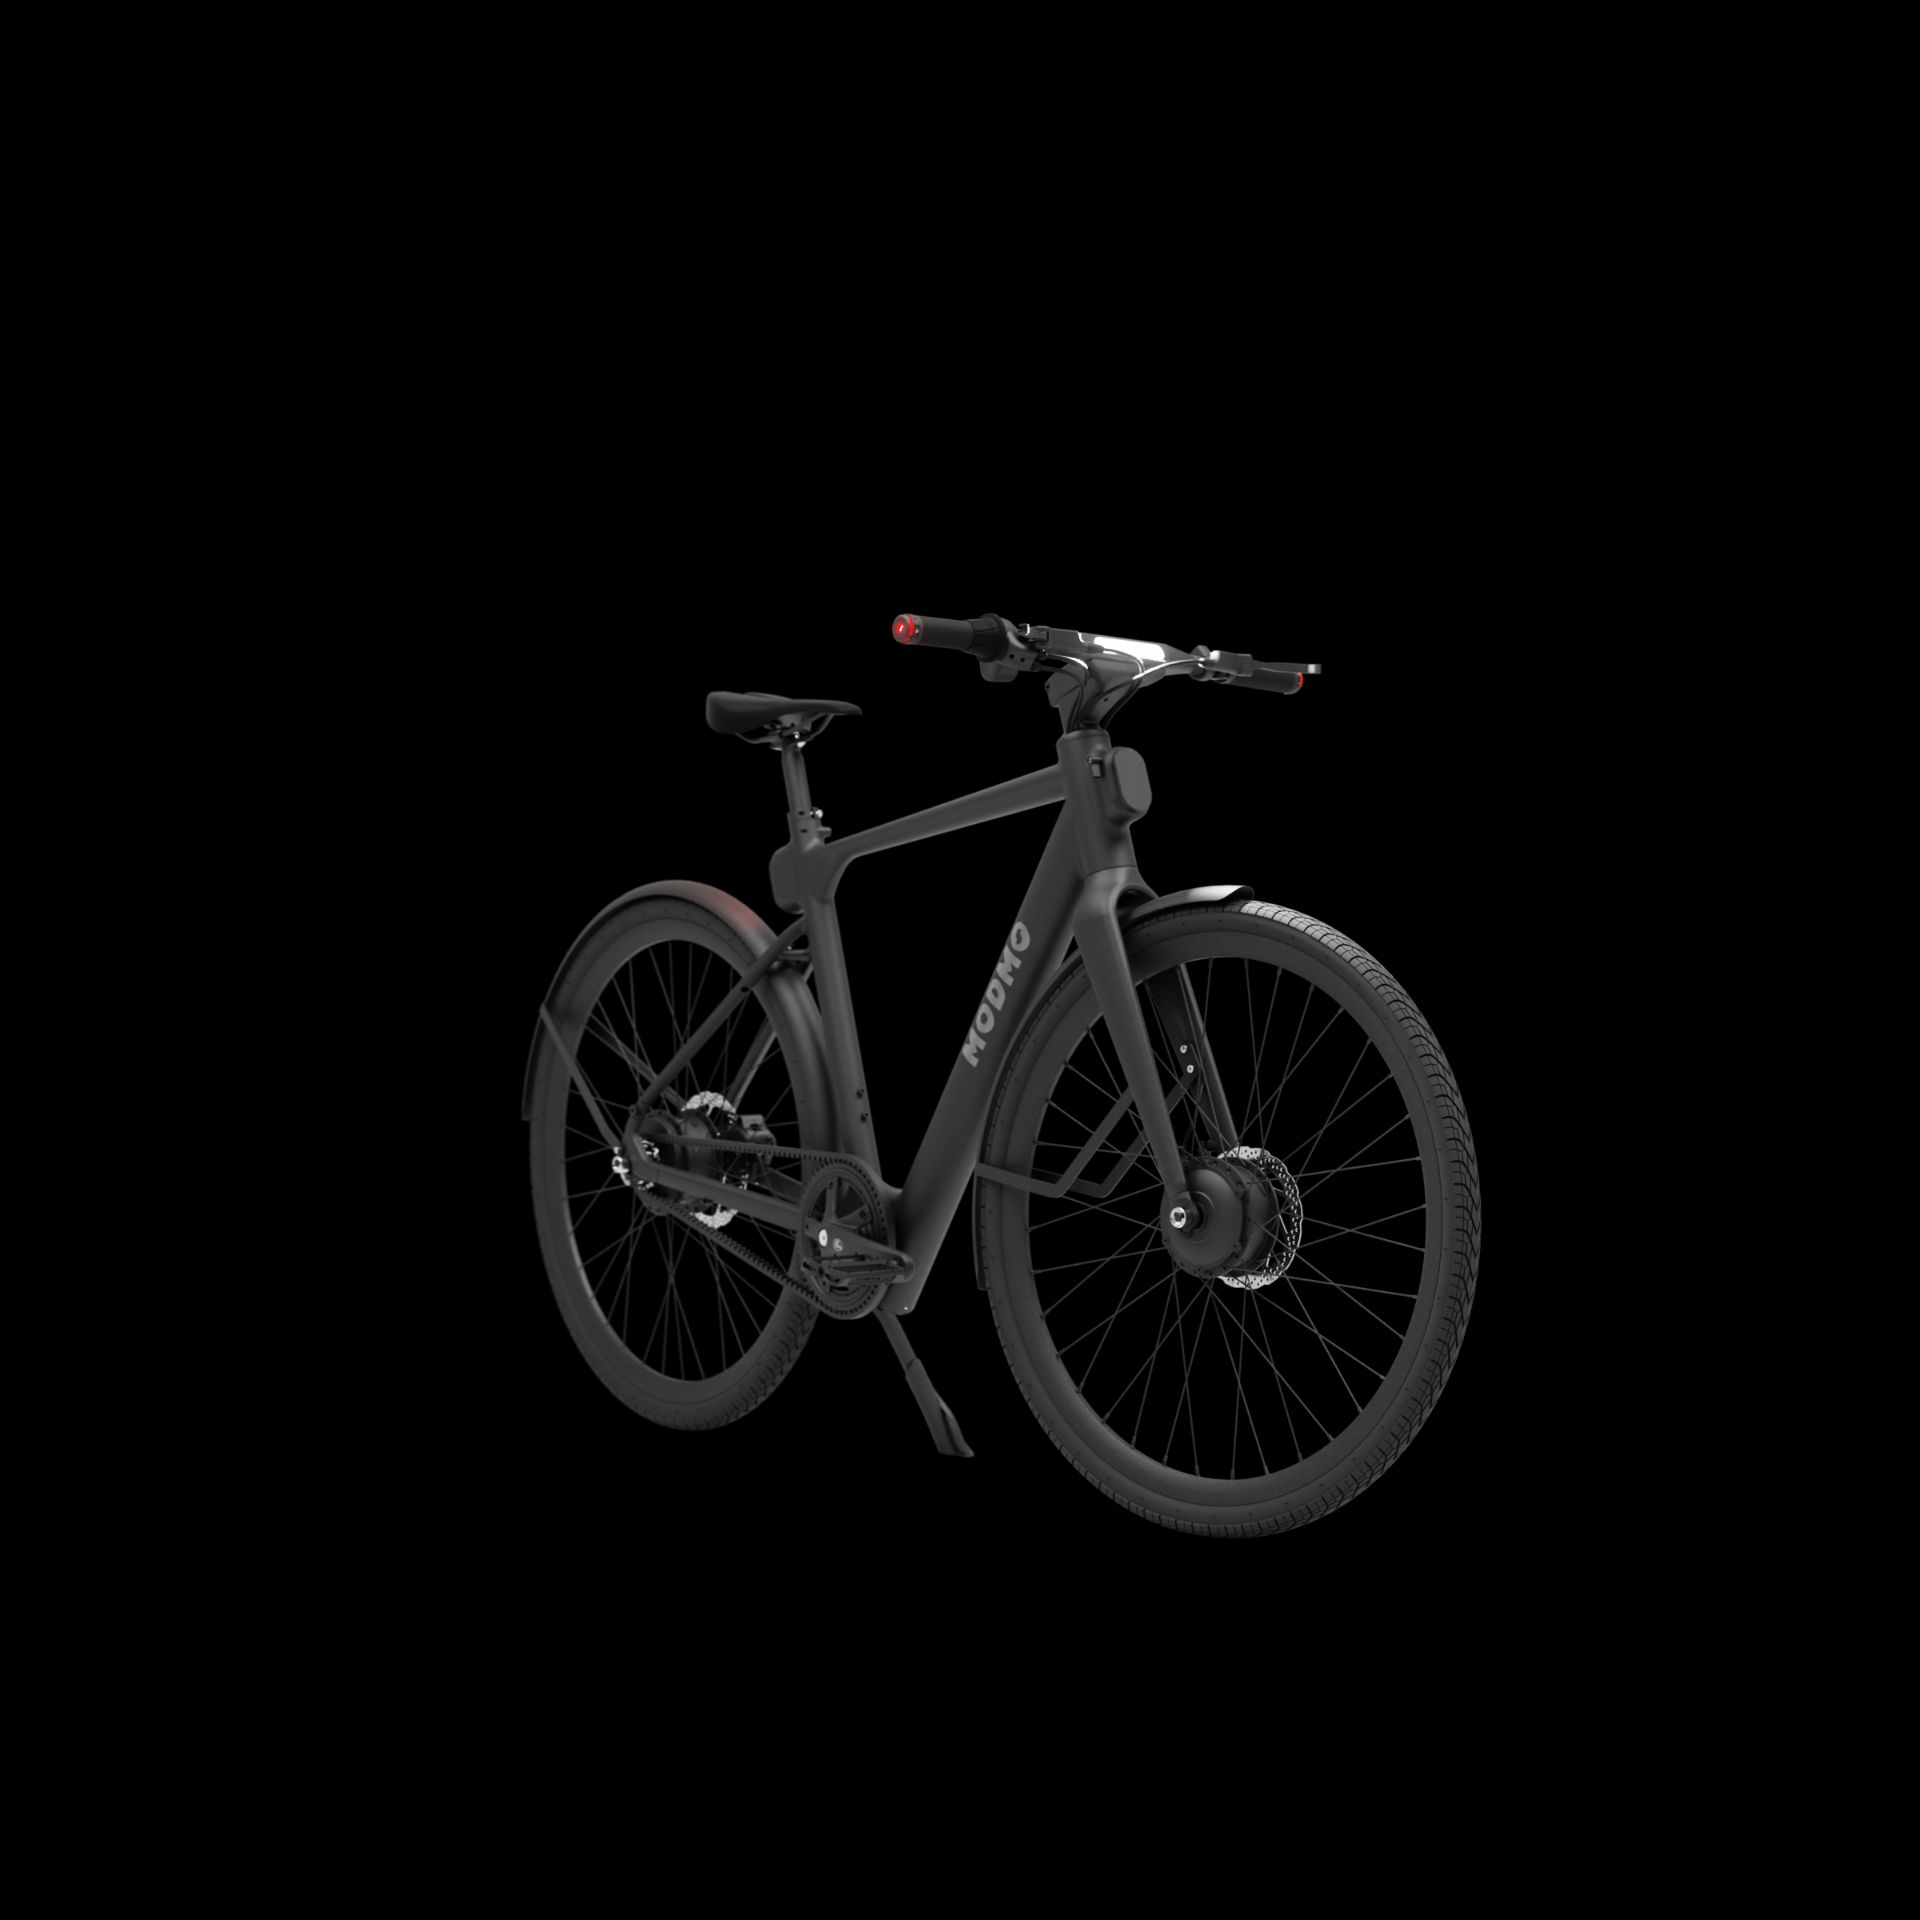 Modmo Saigon+ Electric Bicycle - RRP £2800 - Size S (Rider: 140-155cm) - Image 8 of 16